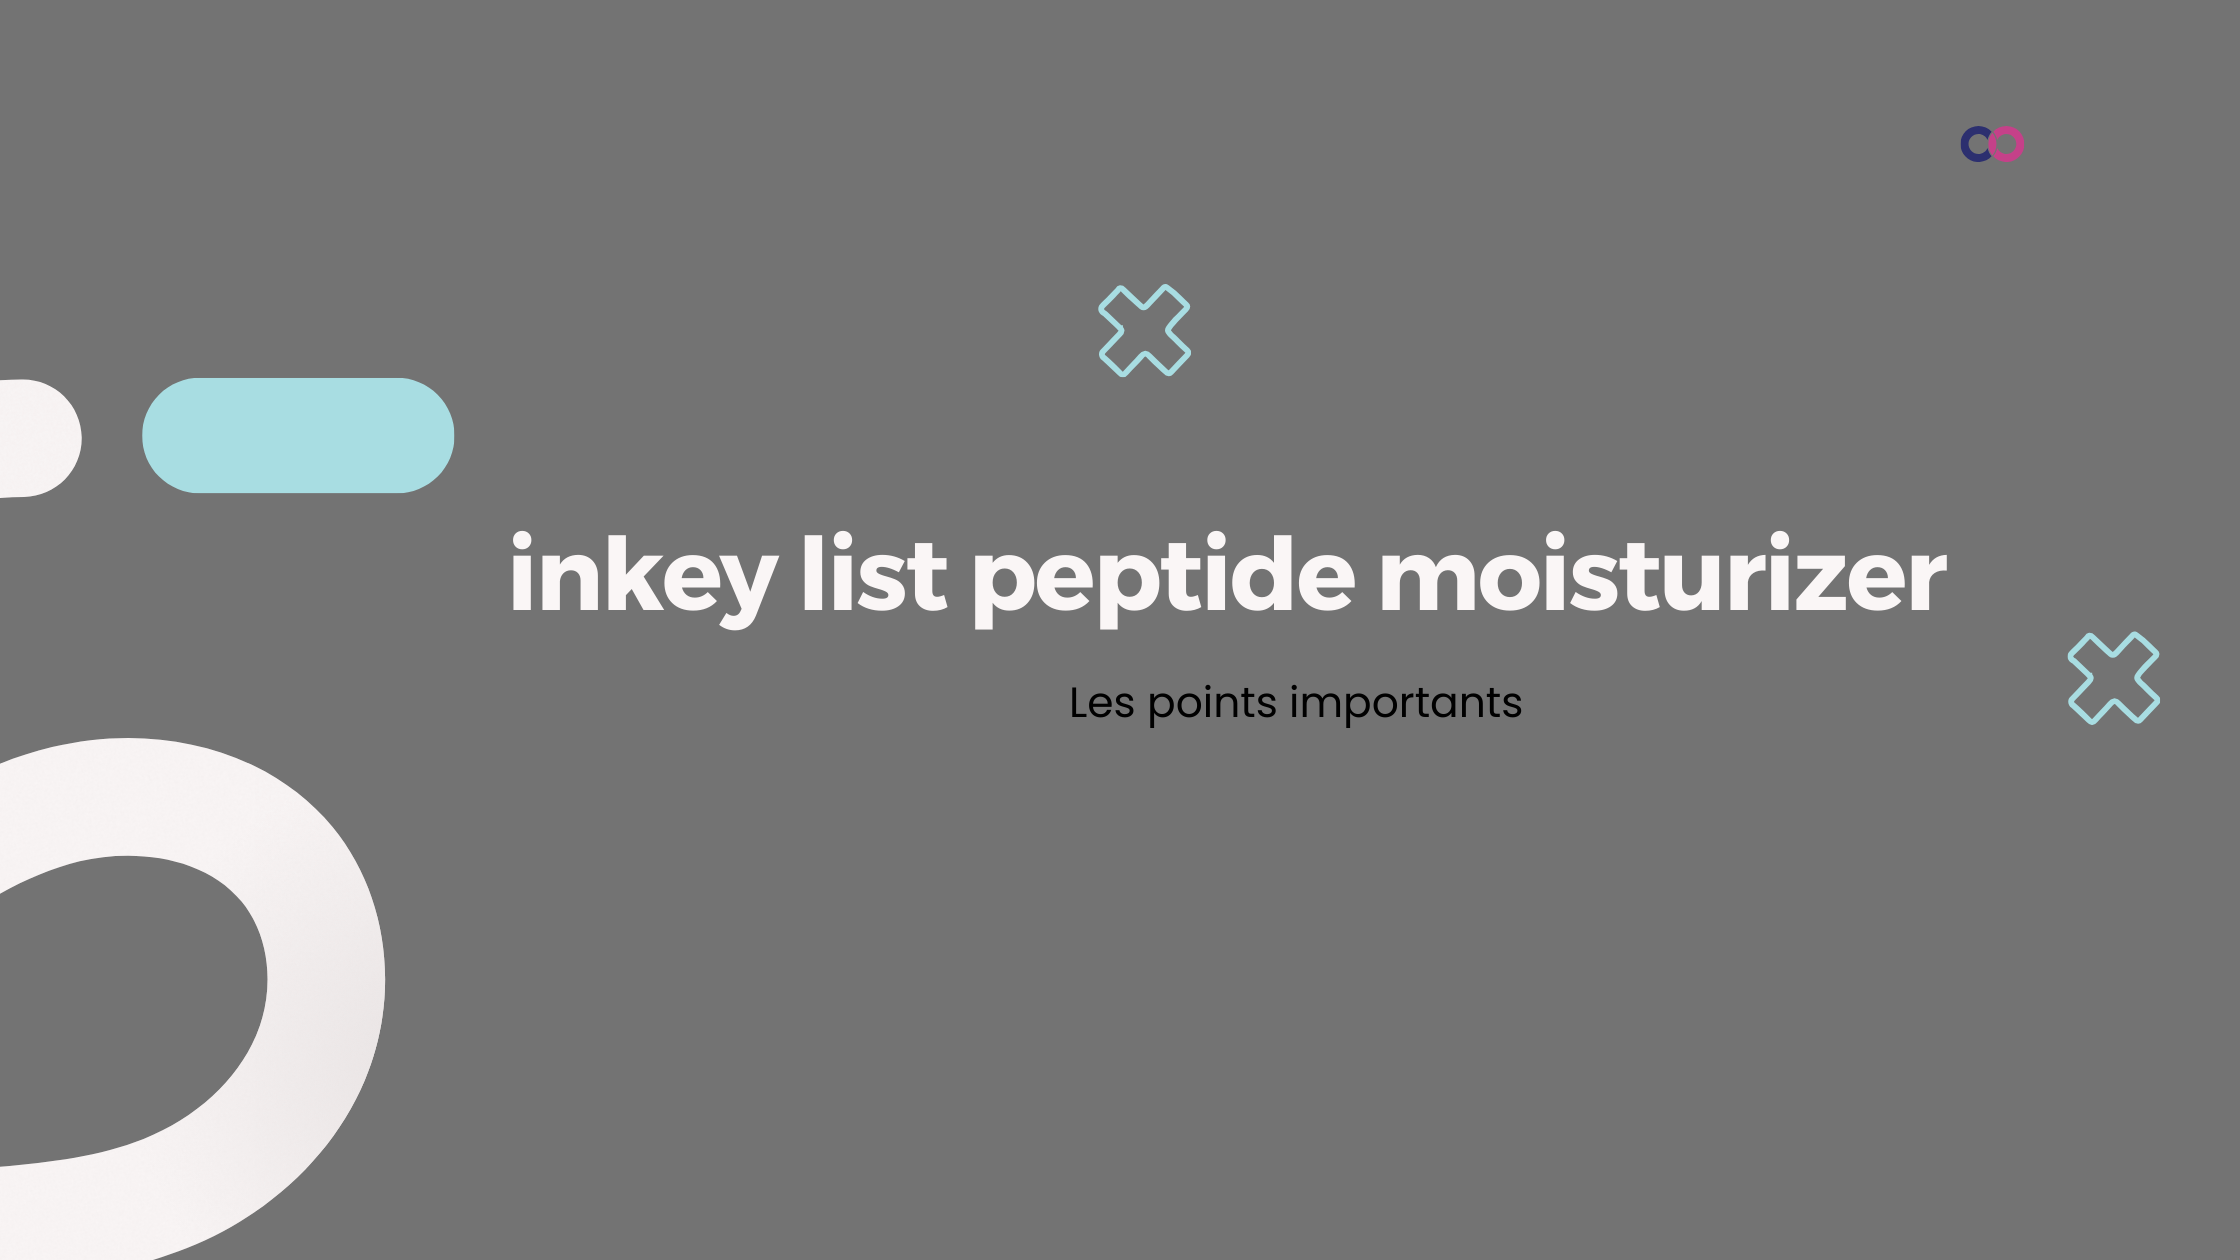 inkey list peptide moisturizer | Les points importants